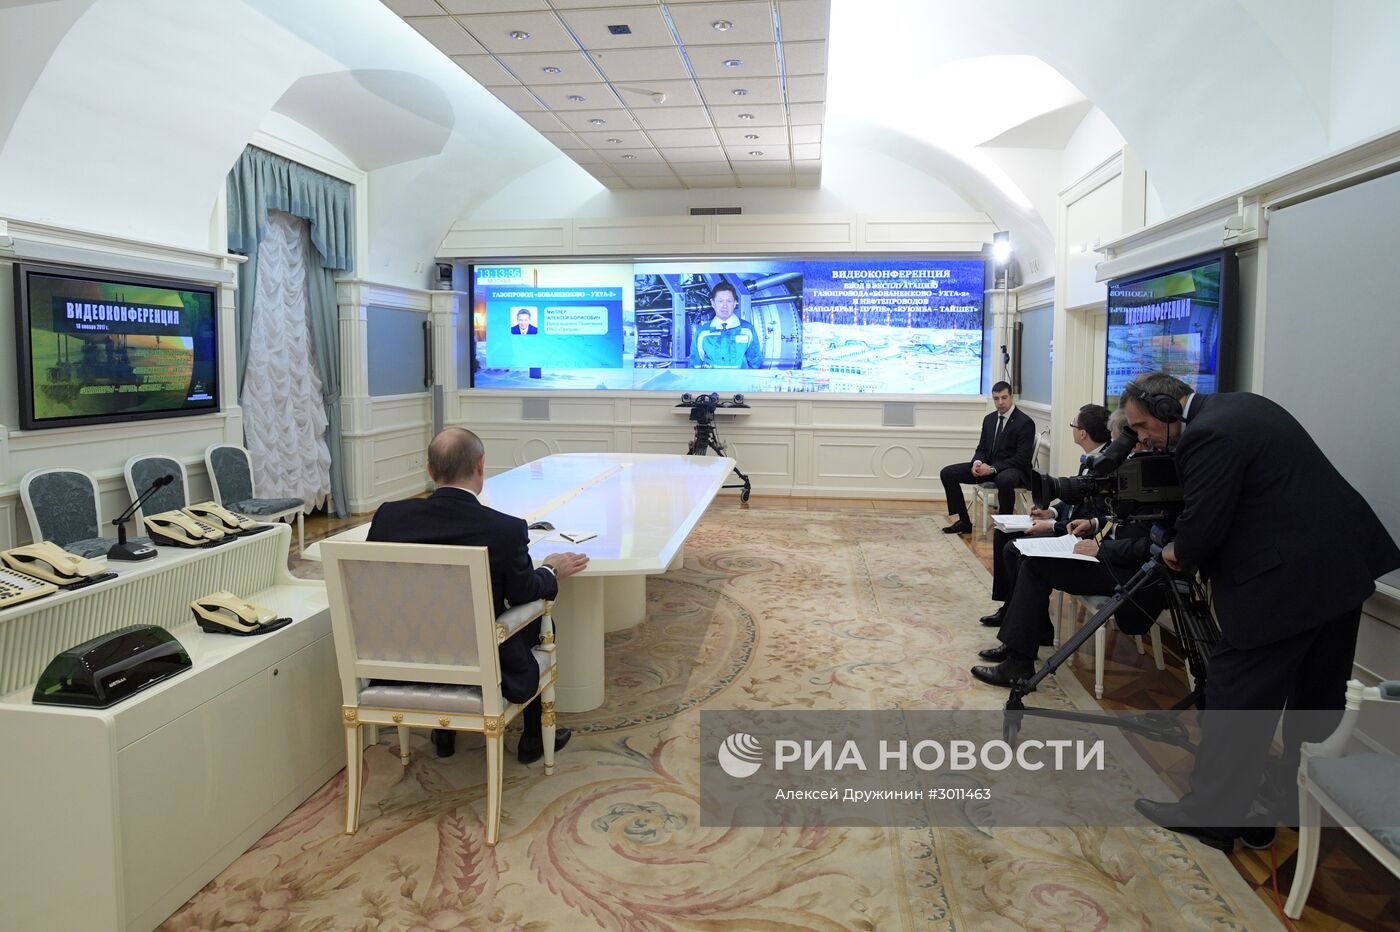 Президент РФ В. Путин дал старт работе газопровода "Бованенково – Ухта-2" и нефтепроводов "Заполярье – Пурпе" и "Куюмба – Тайшет"